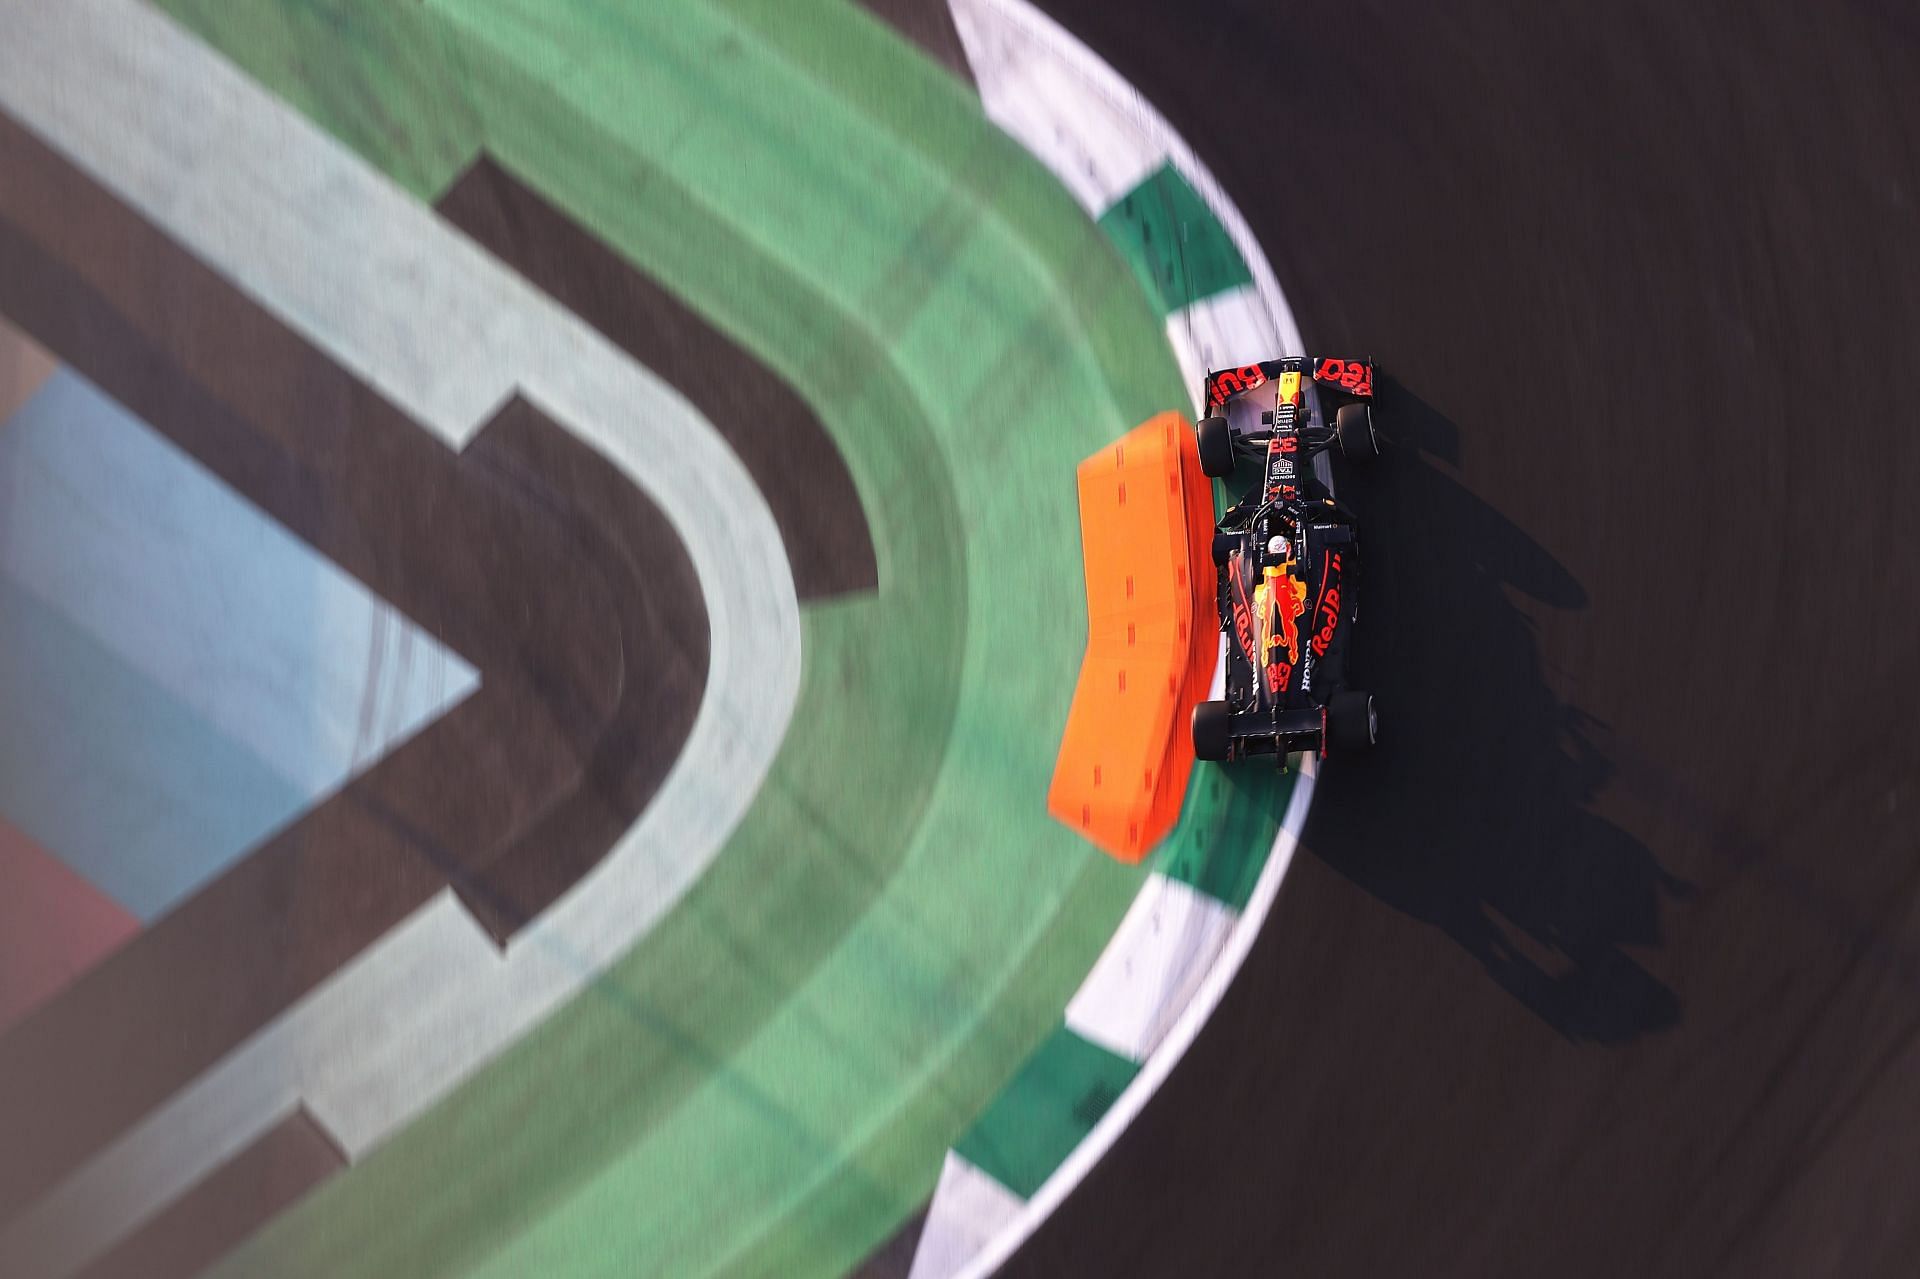 F1 Grand Prix of Saudi Arabia - Max Verstappen gets a taste of the brand new track in FP1.